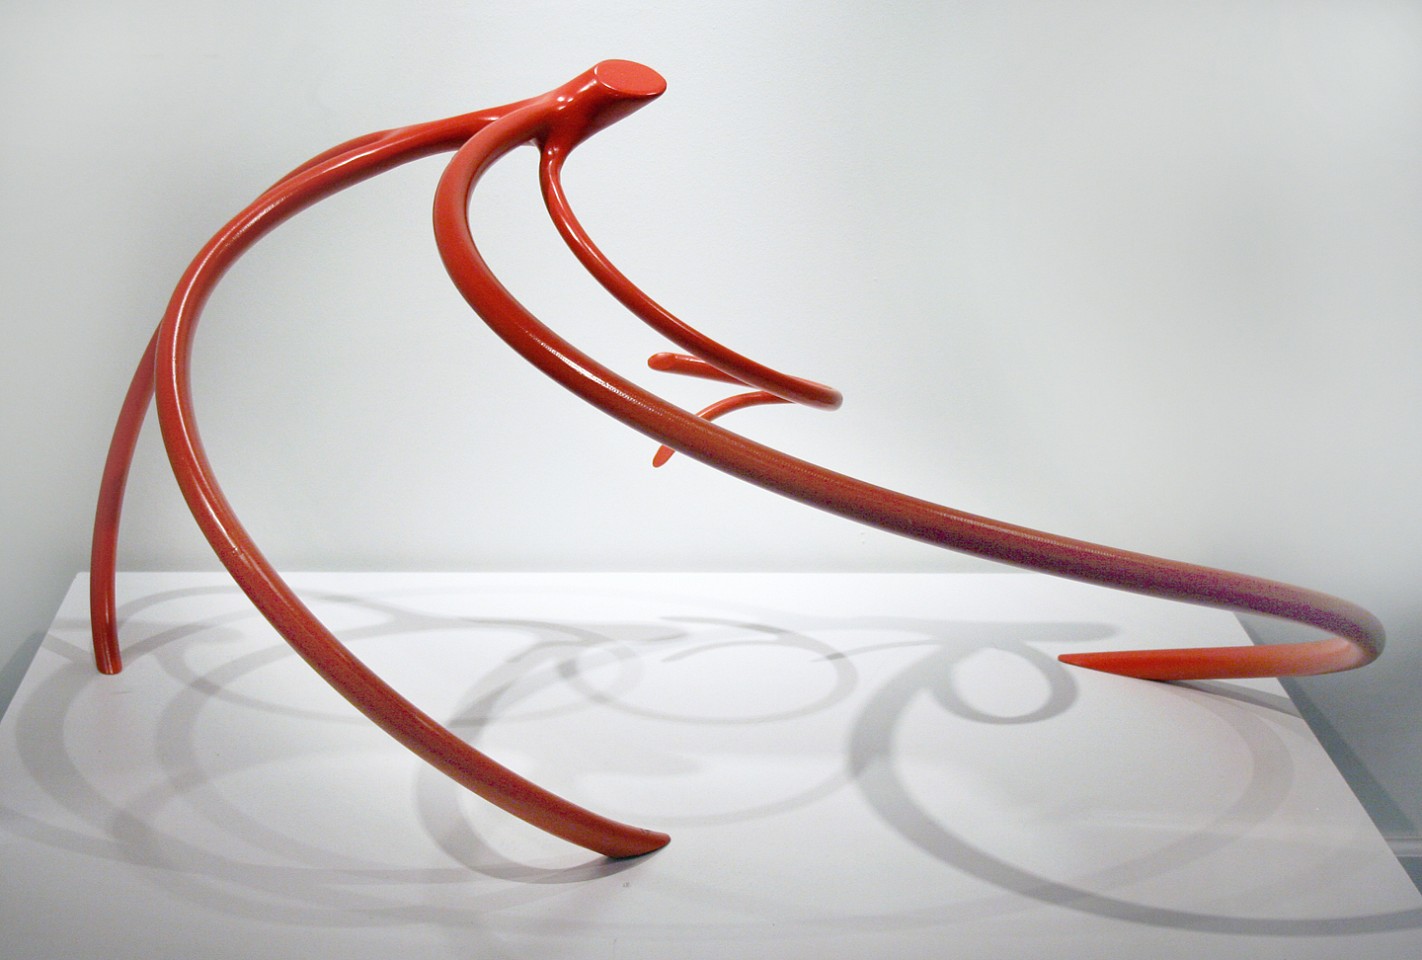 Steve Tobin, Red Root, 2011
Steel, 21 x 43 x 26 inches
63